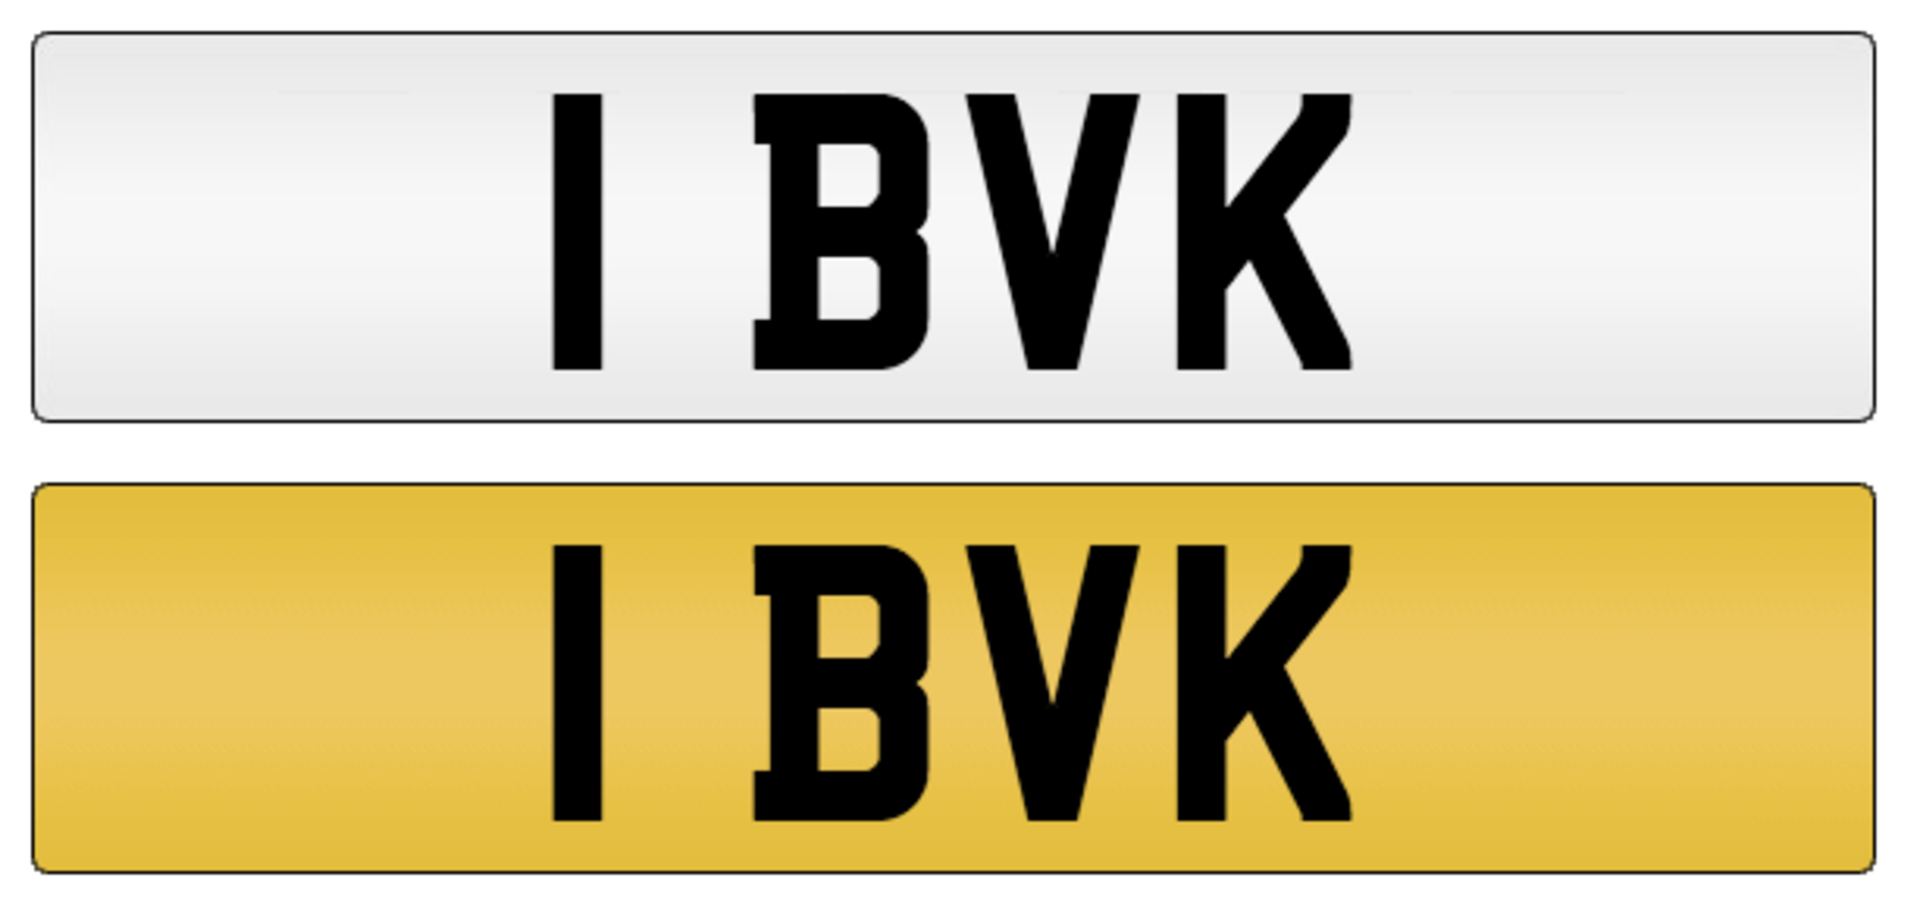 1 BVK - Cherished Plate